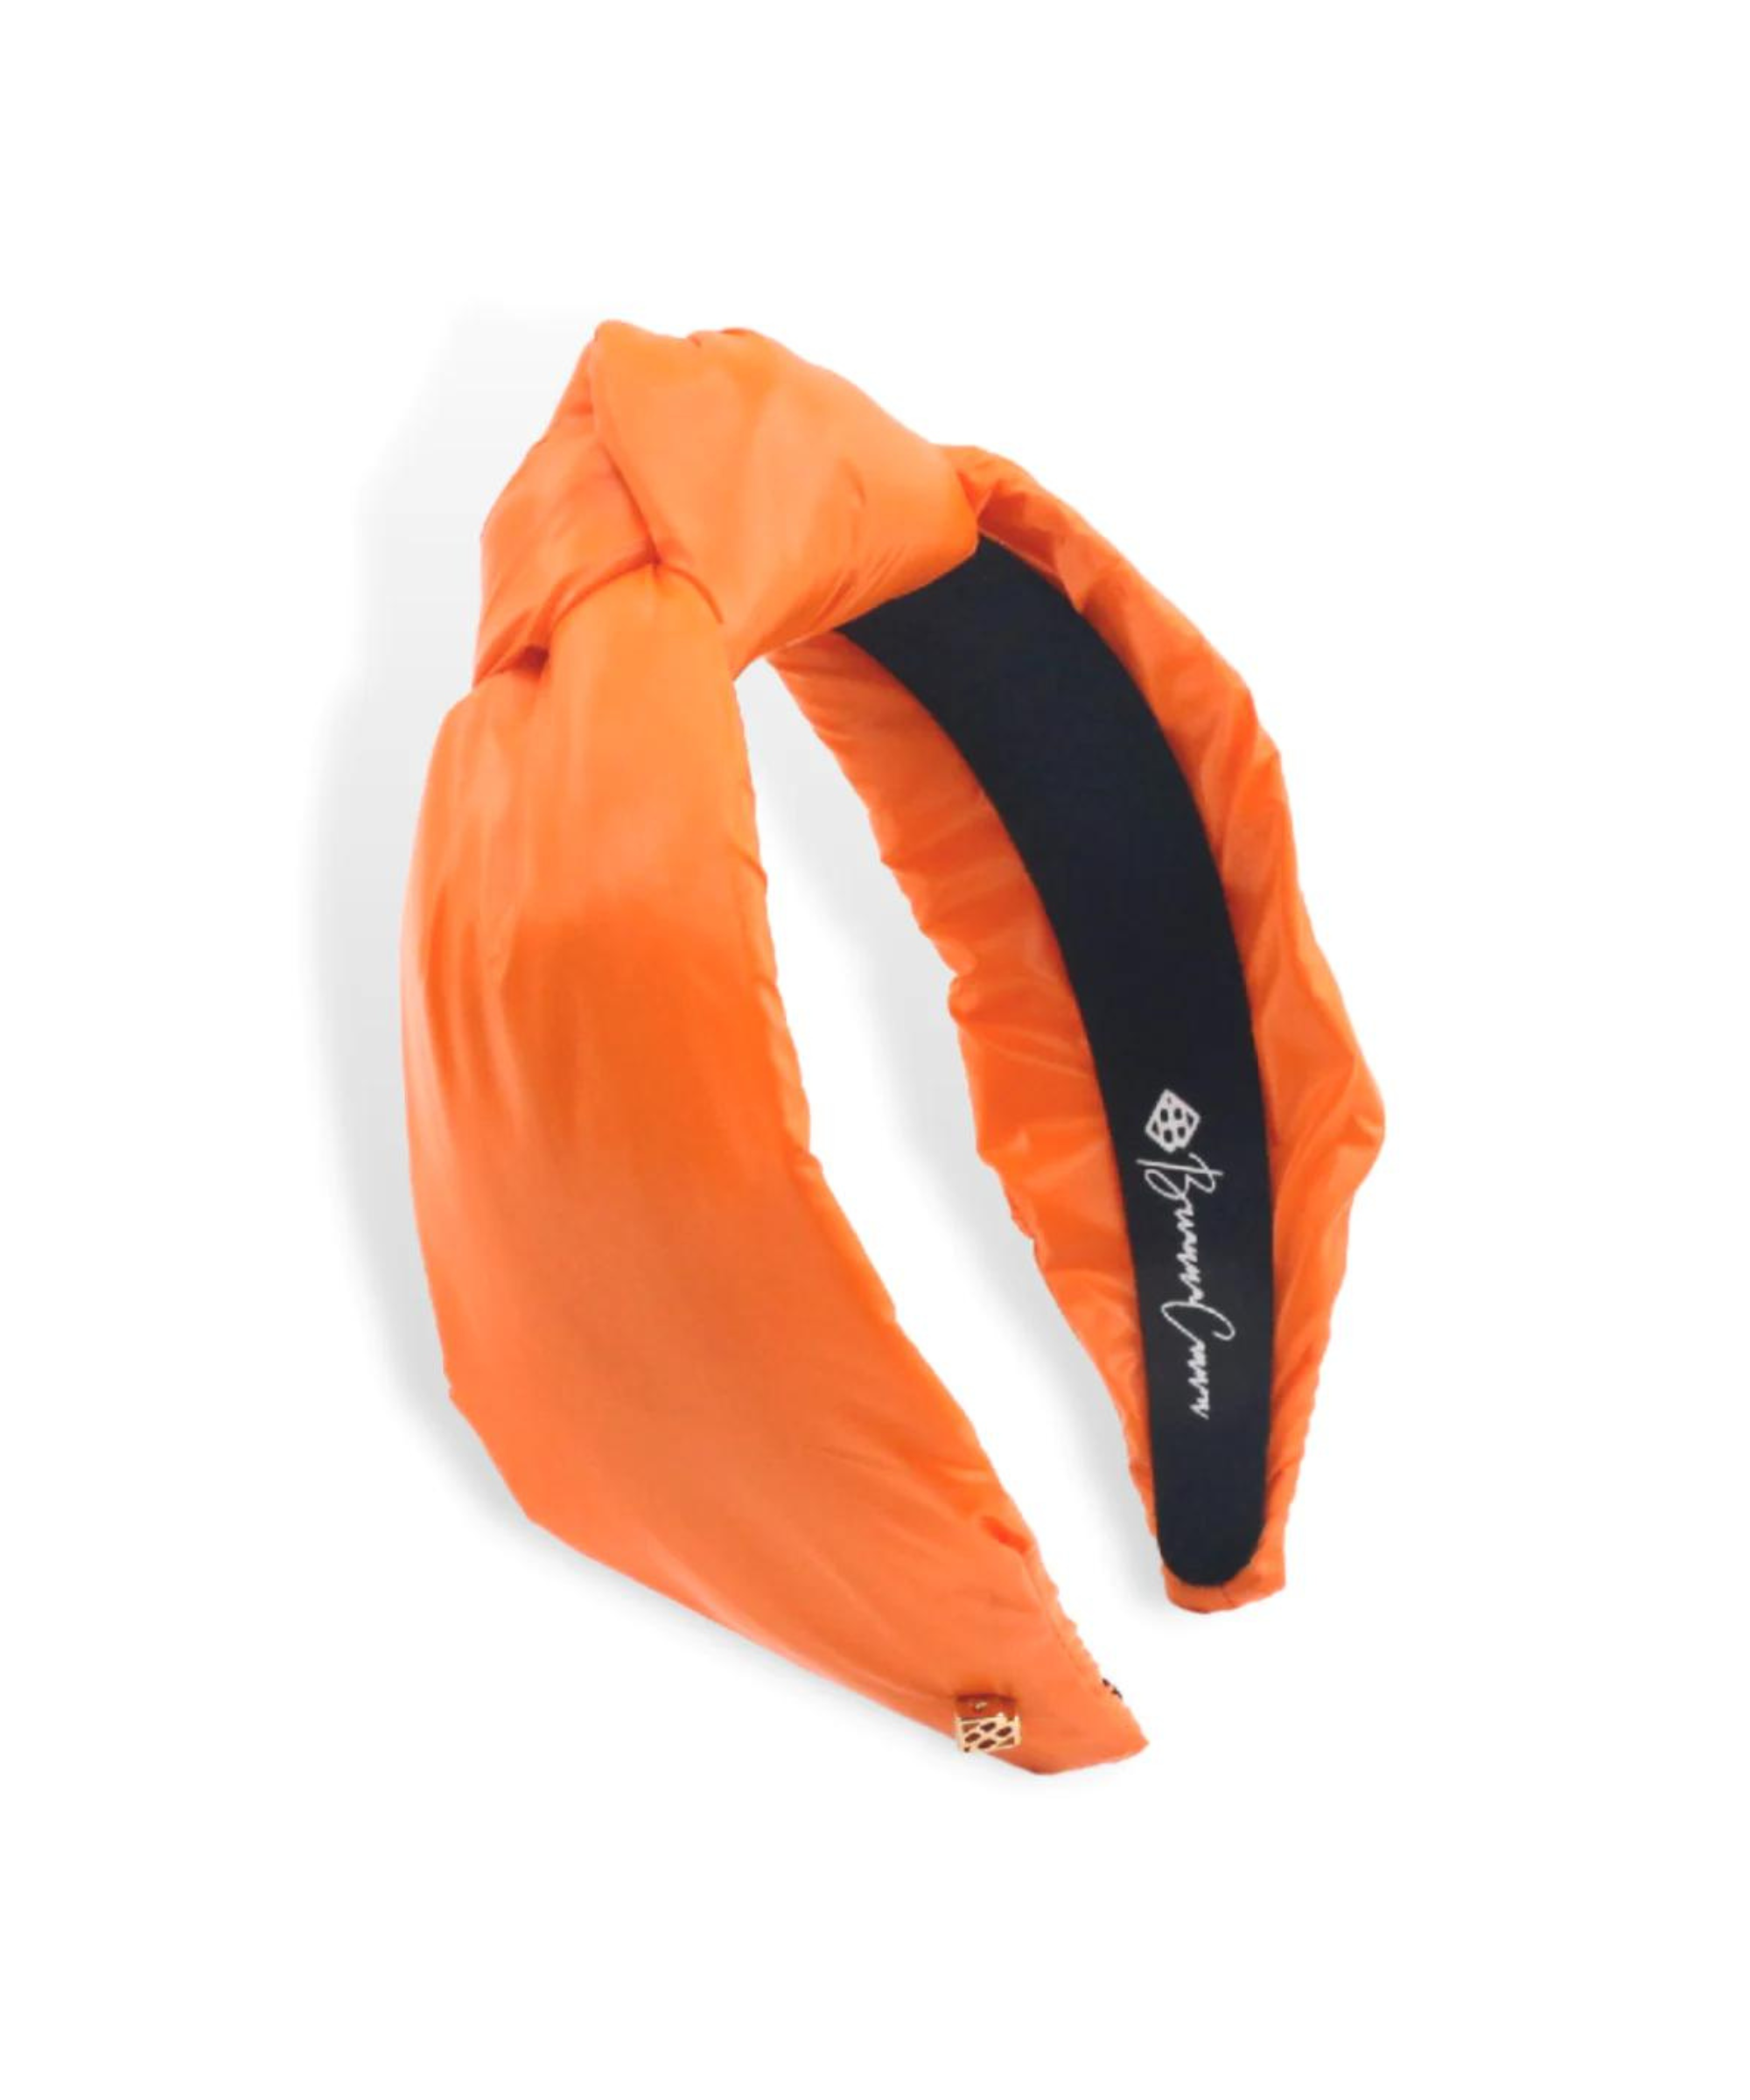 Orange Knotted Headband